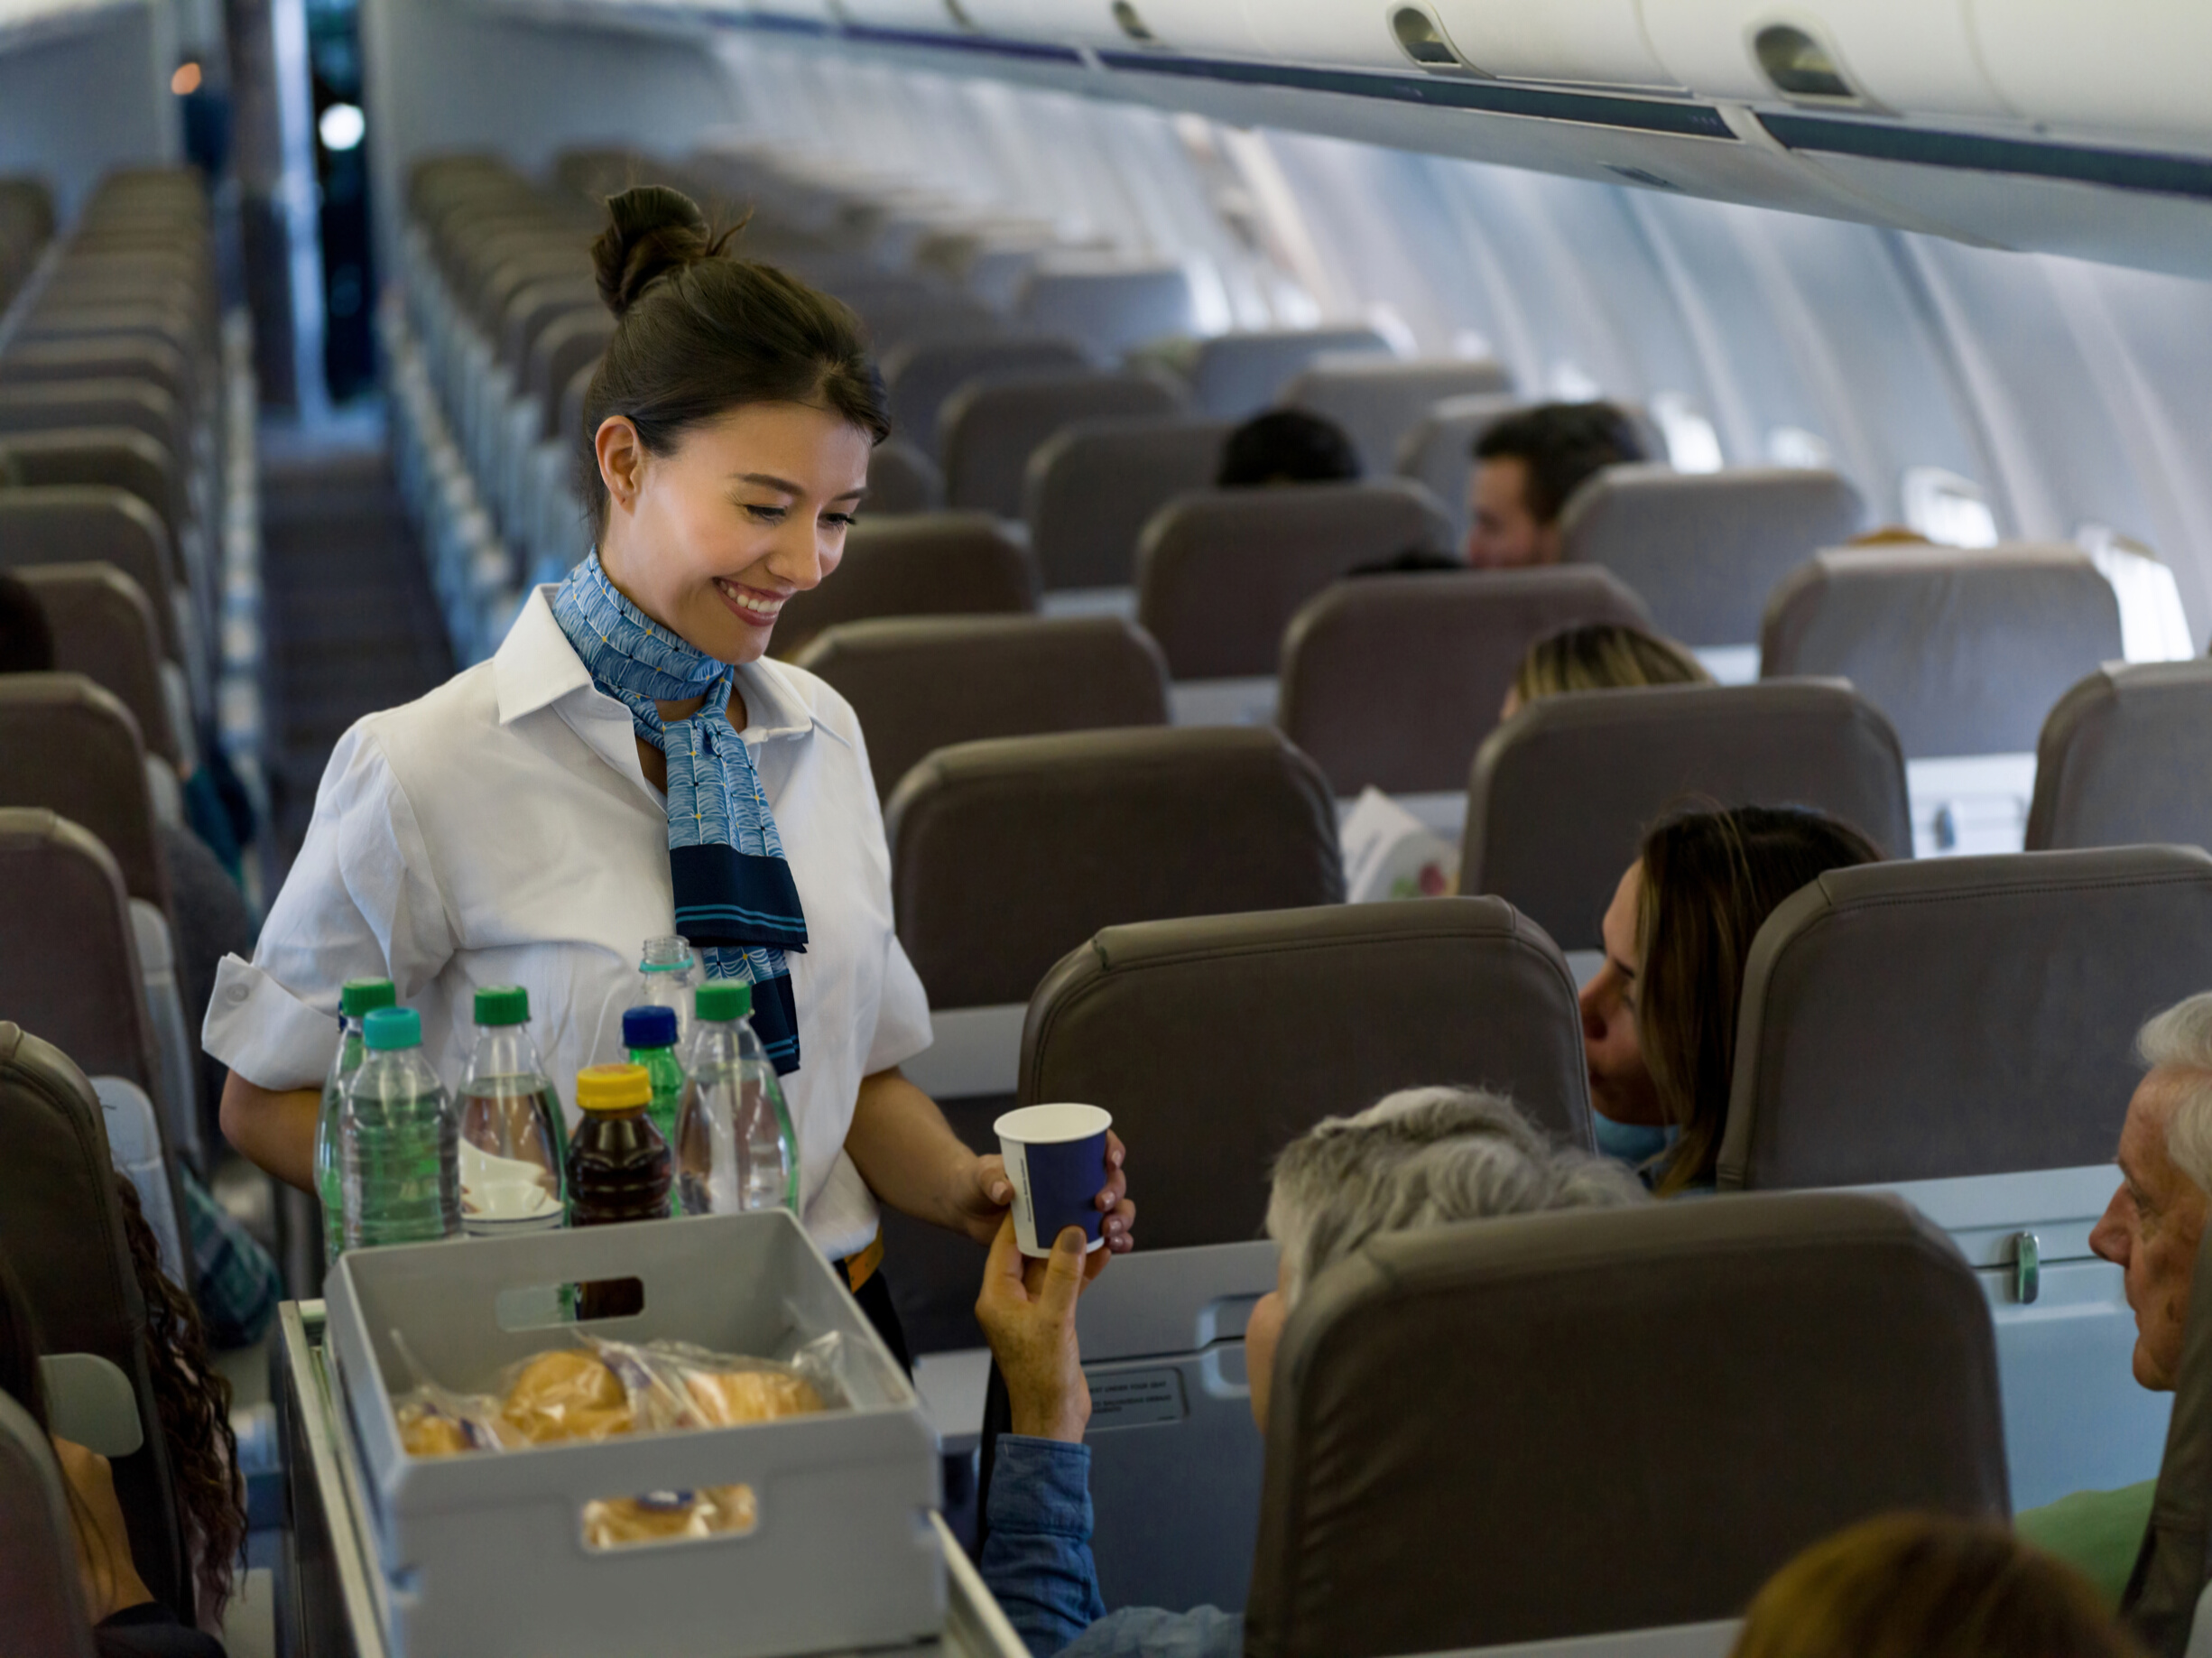 Friendly flight attendant serving drinks in an airplane